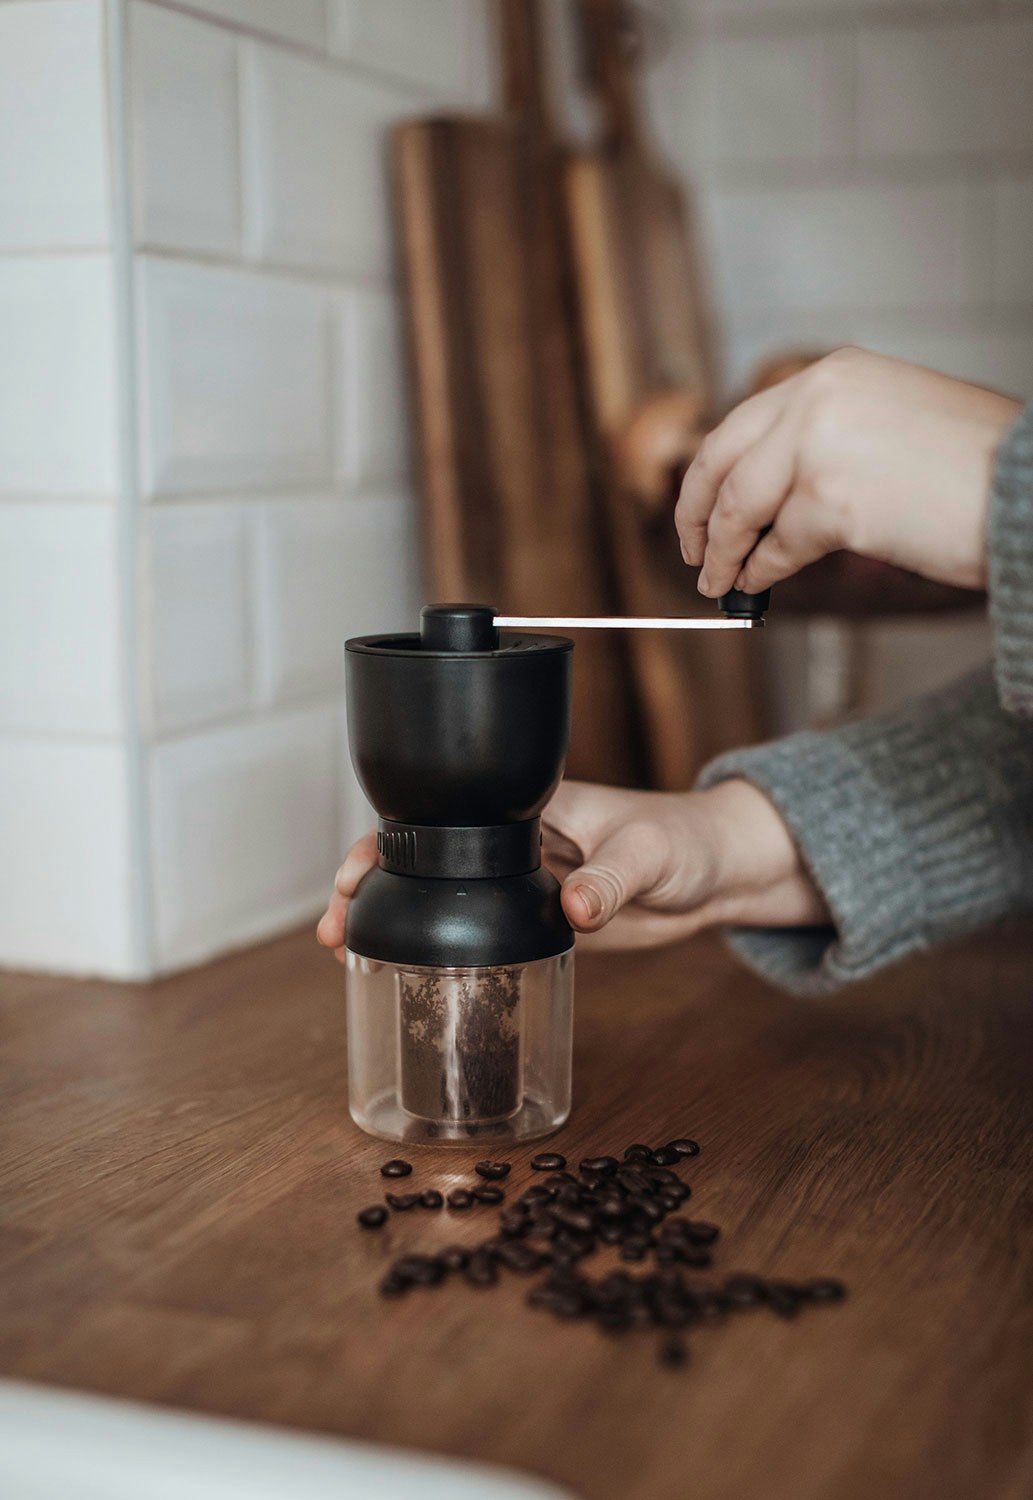 https://royaldesign.com/image/2/dorre-catura-coffee-grinder-manual-ceramic-mill-1?w=800&quality=80